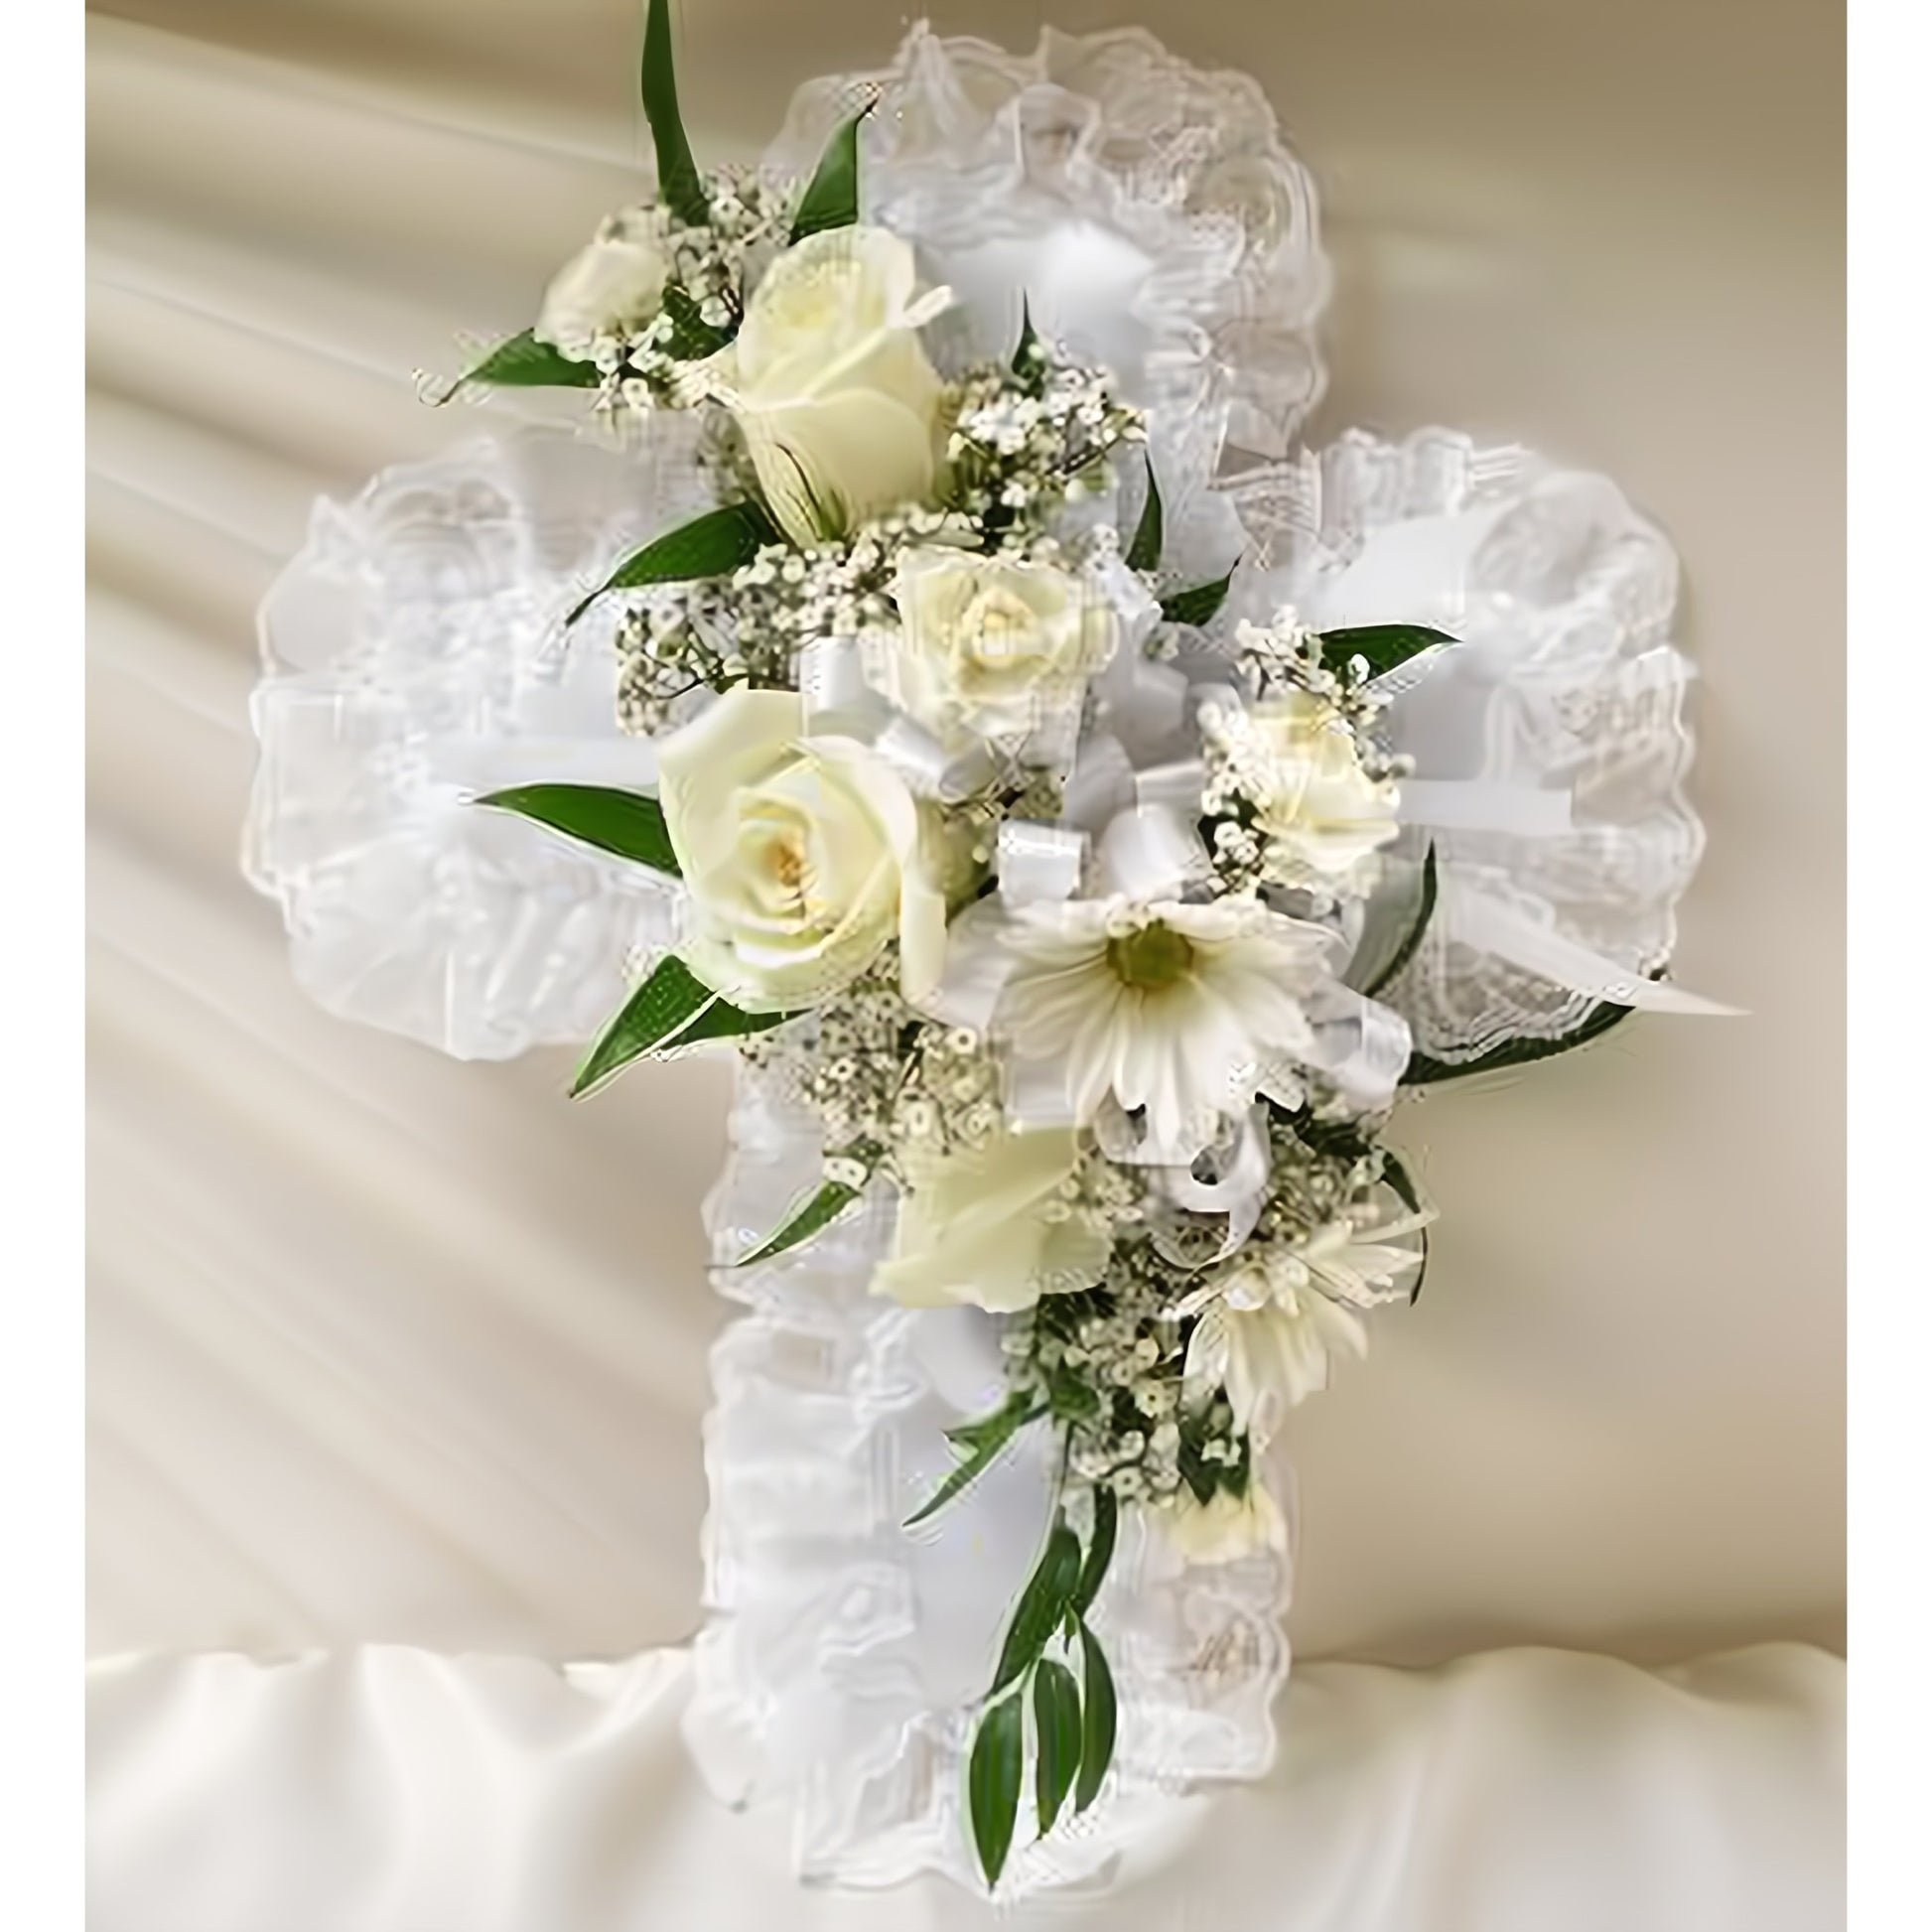 White Satin Cross Casket Pillow - Floral Arrangement - Flower Delivery Brooklyn